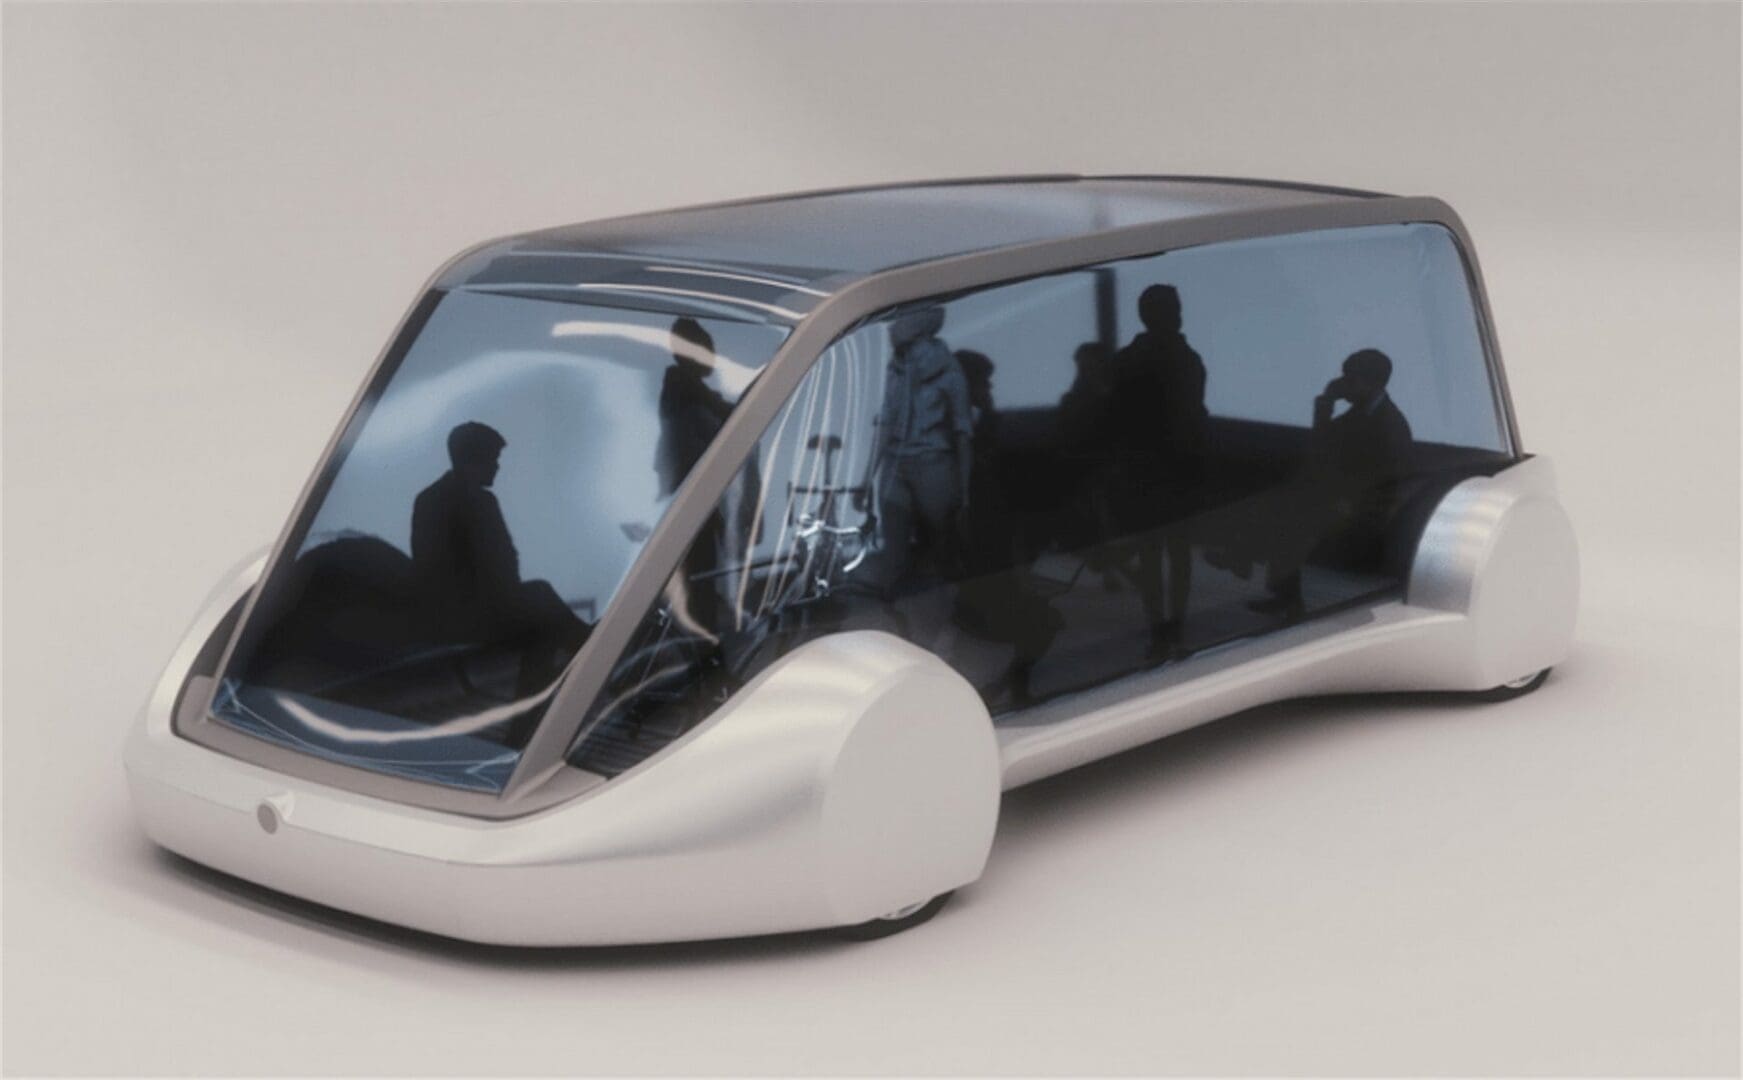  tesla-robot-taxi-christan-kromme-speaker-futurist.